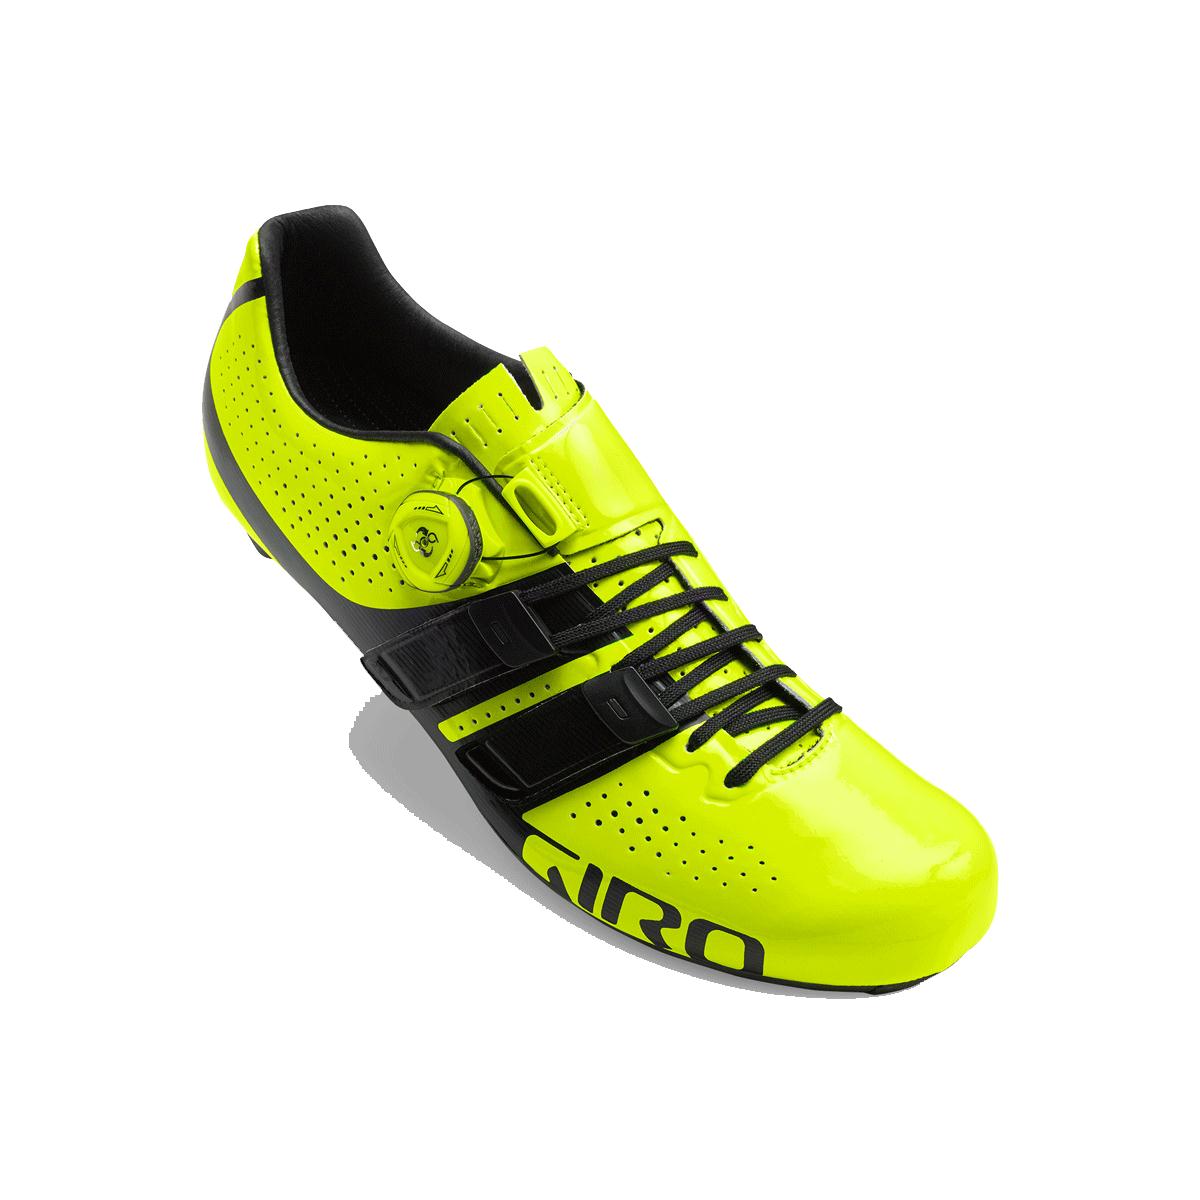 GIRO Factor Techlace Road Cycling Shoes 2018 Highlight Yellow/Black 46